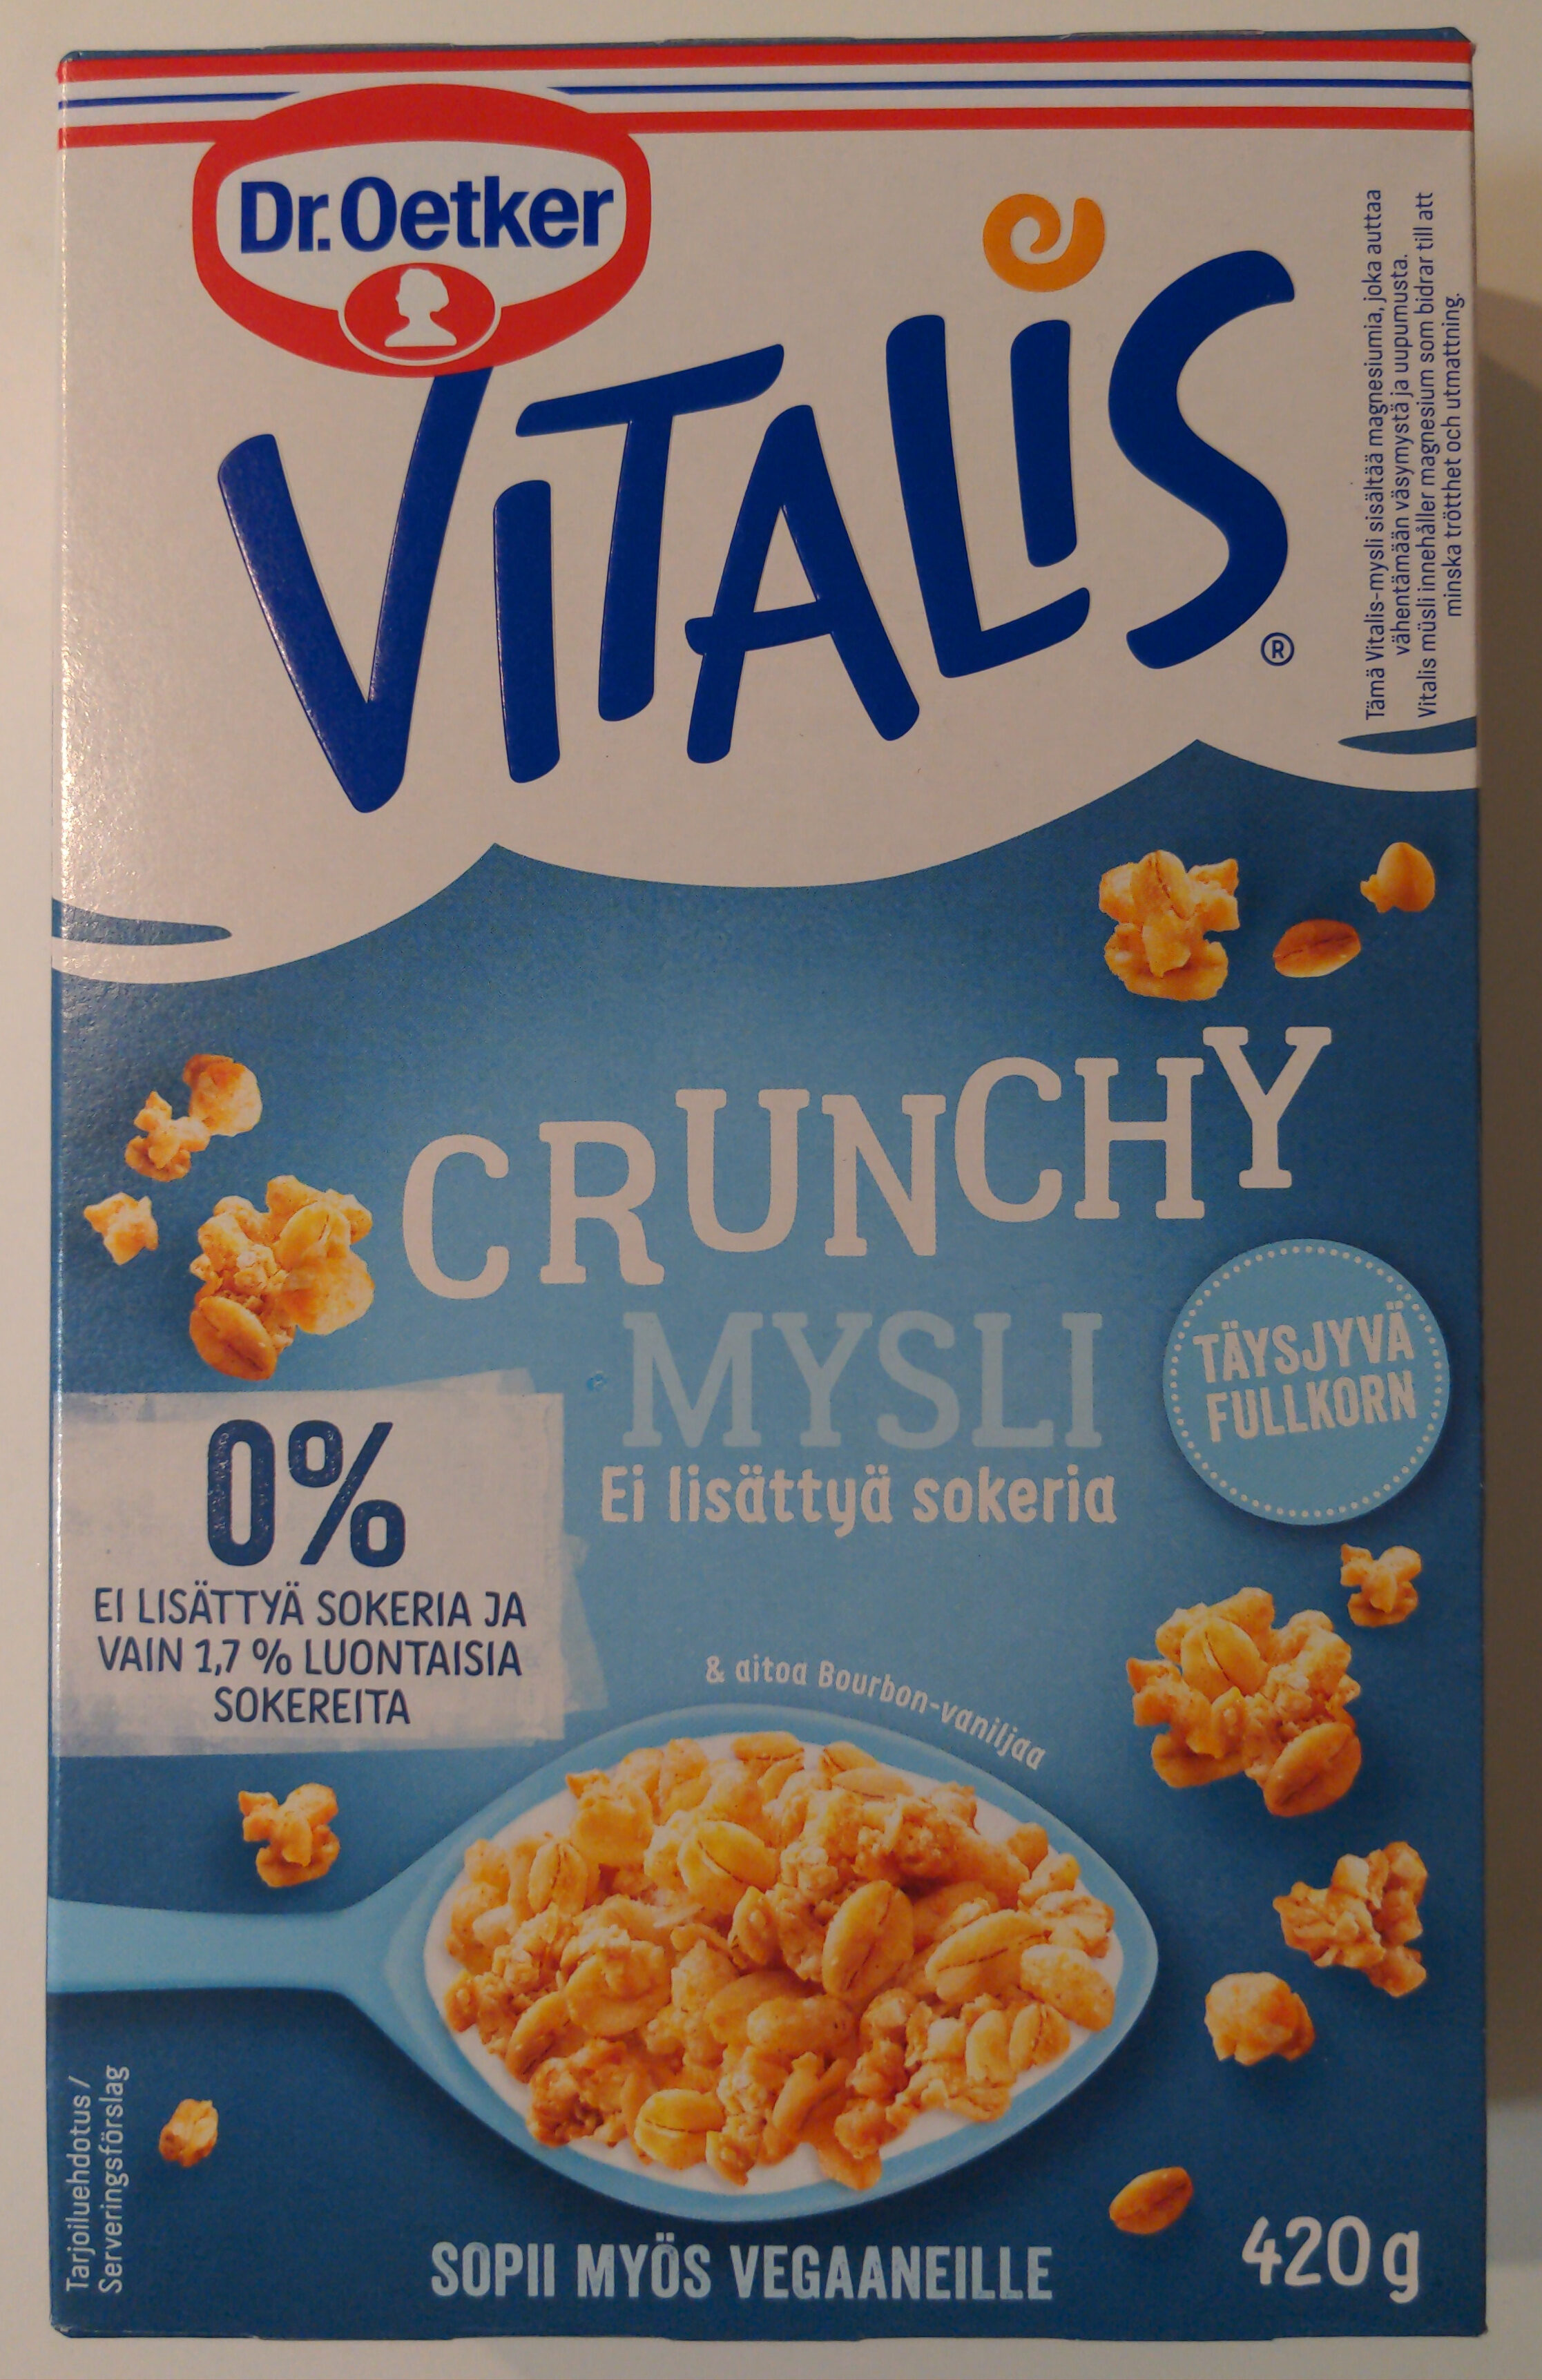 Vitalis crunchy mysli - Product - fi